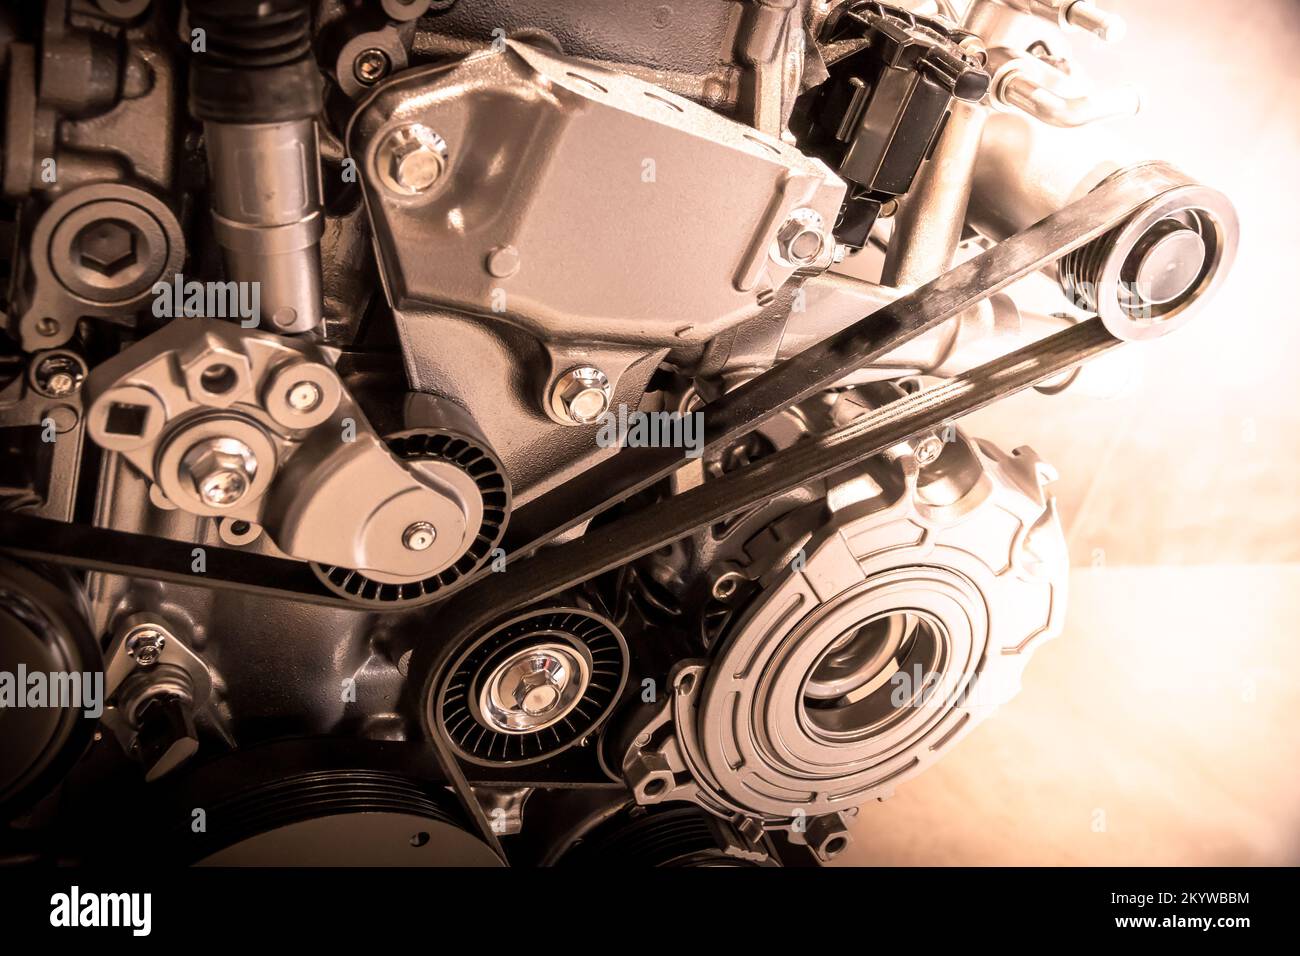 Close up of the mechanics of a car engine. Stock Photo